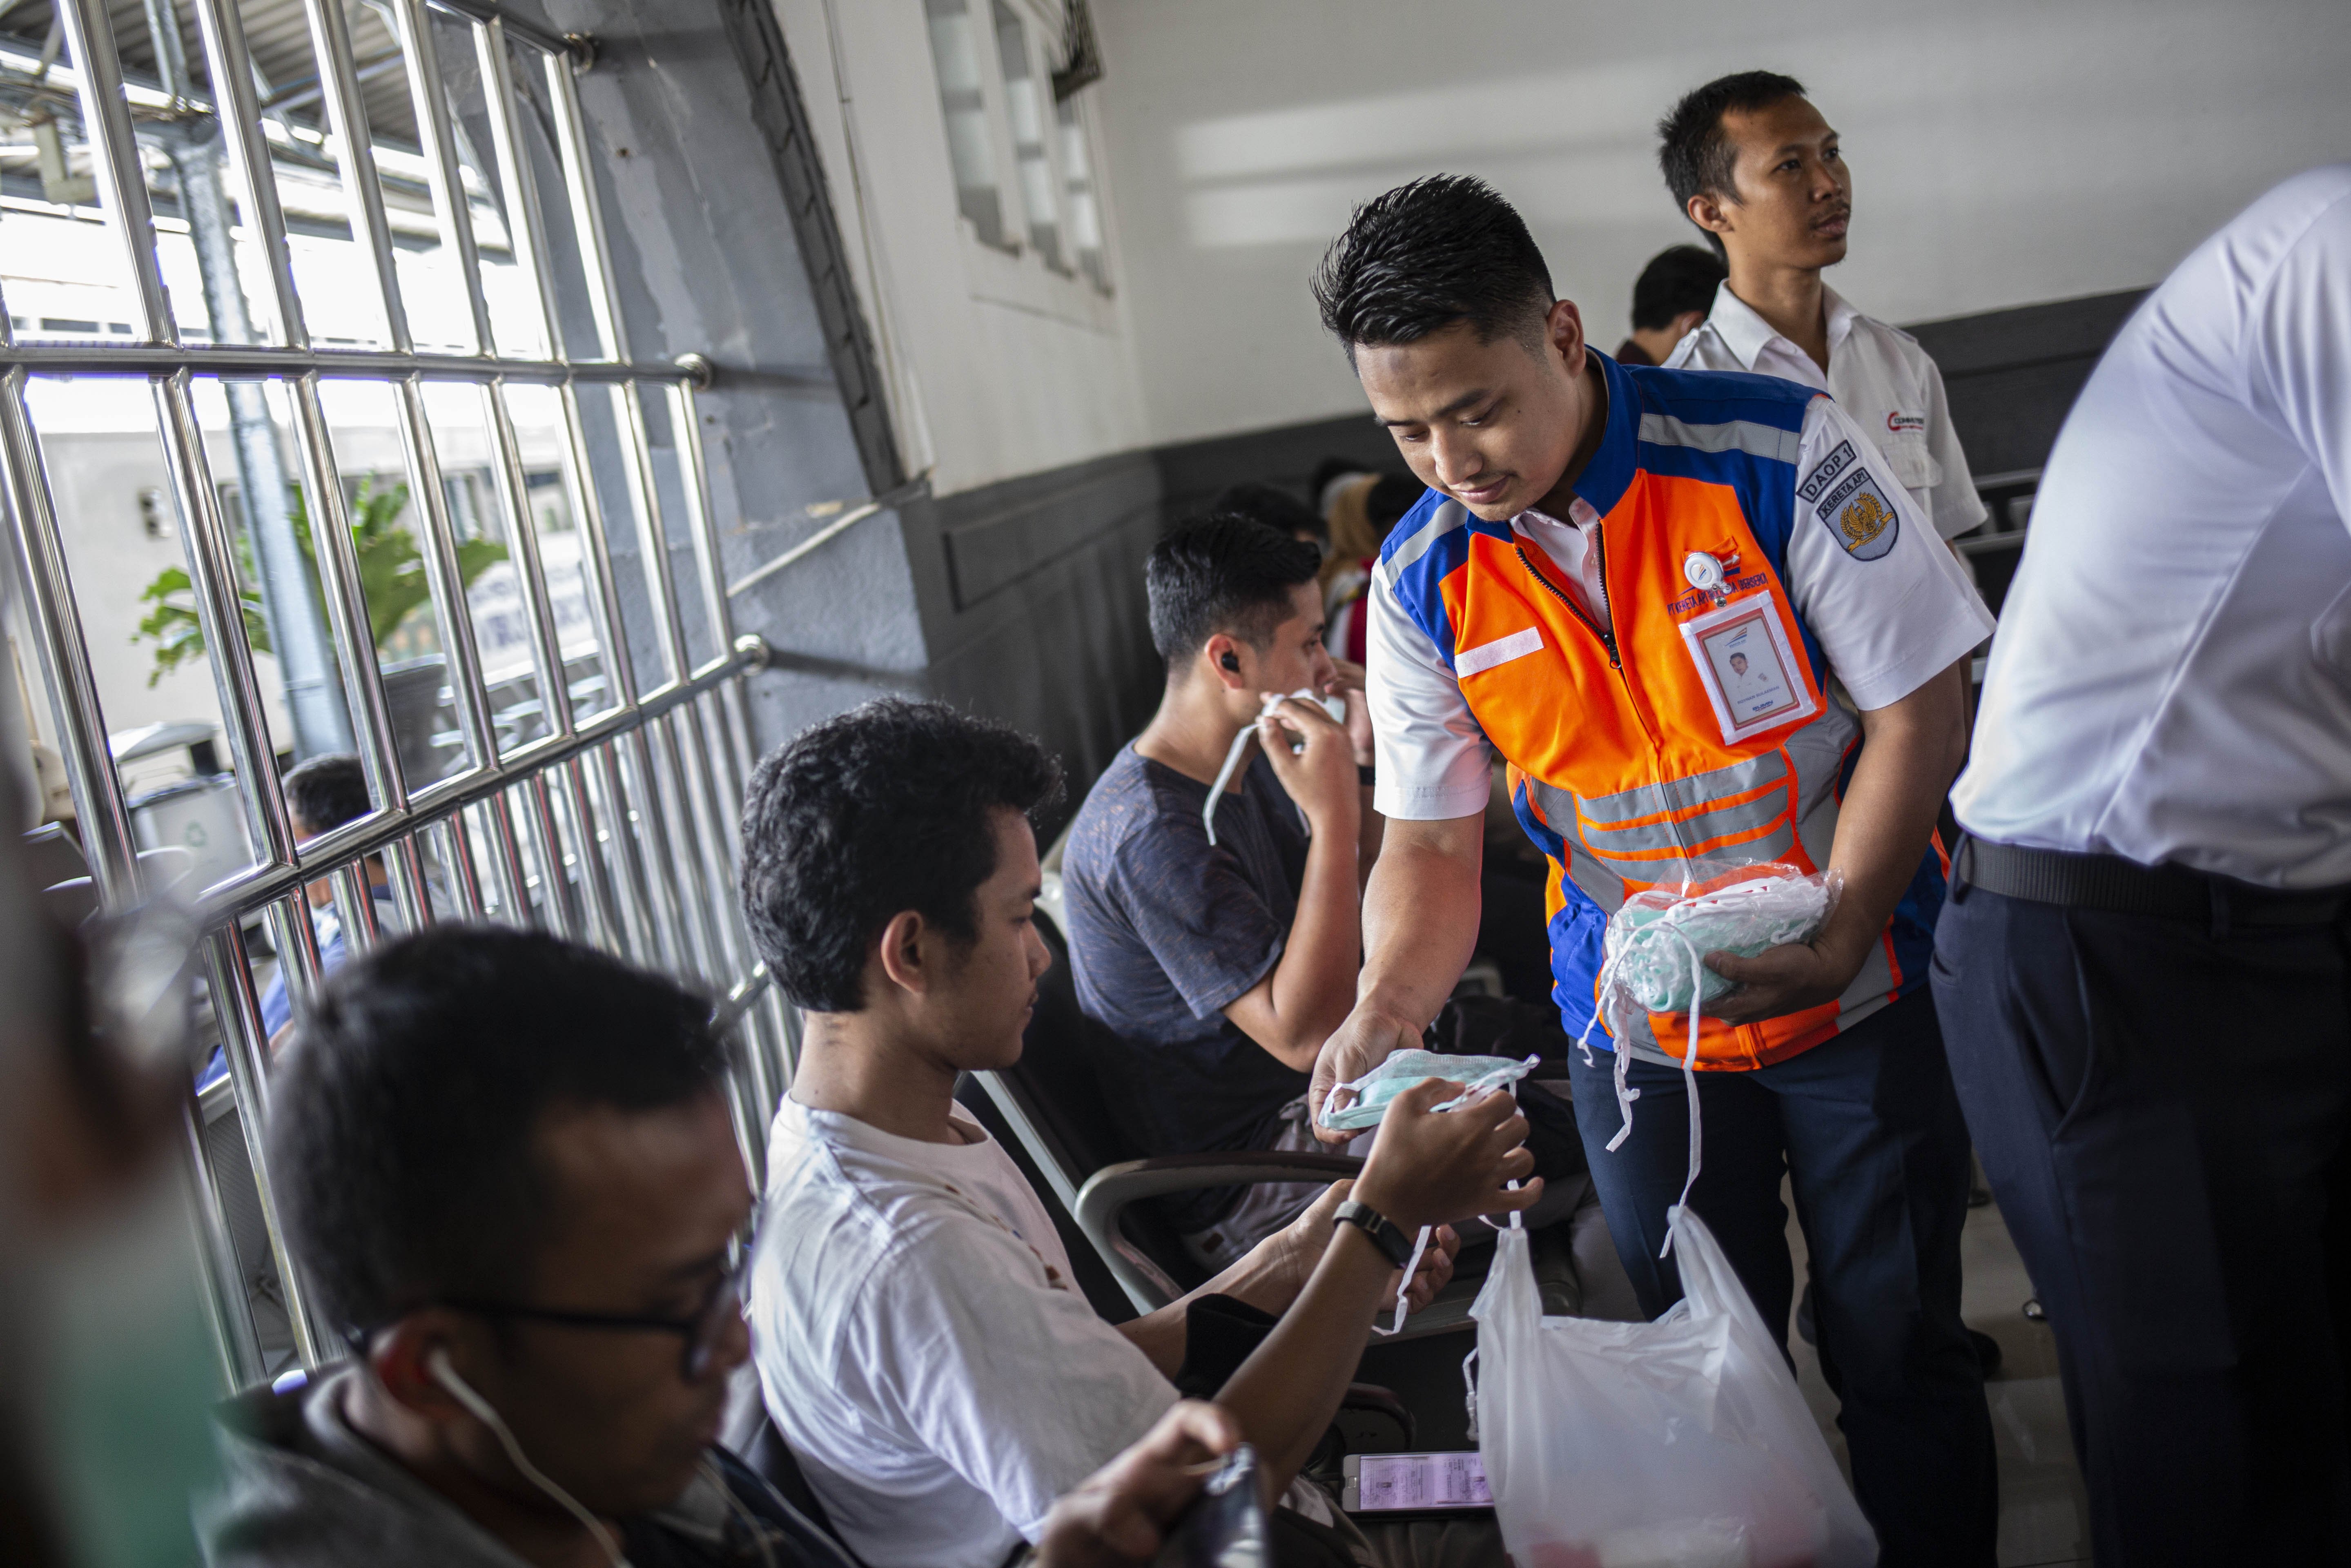 Petugas KAI memberikan masker kepada penumpang di Stasiun Pasar Senen, Jakarta Pusat, Senin (9/3/2020). PT. KAI melakukan sosialisasi pencegahan virus corona serta pembagian masker dan hand sanitazer kepada penumpang guna mencegah penyebaran virus corona.